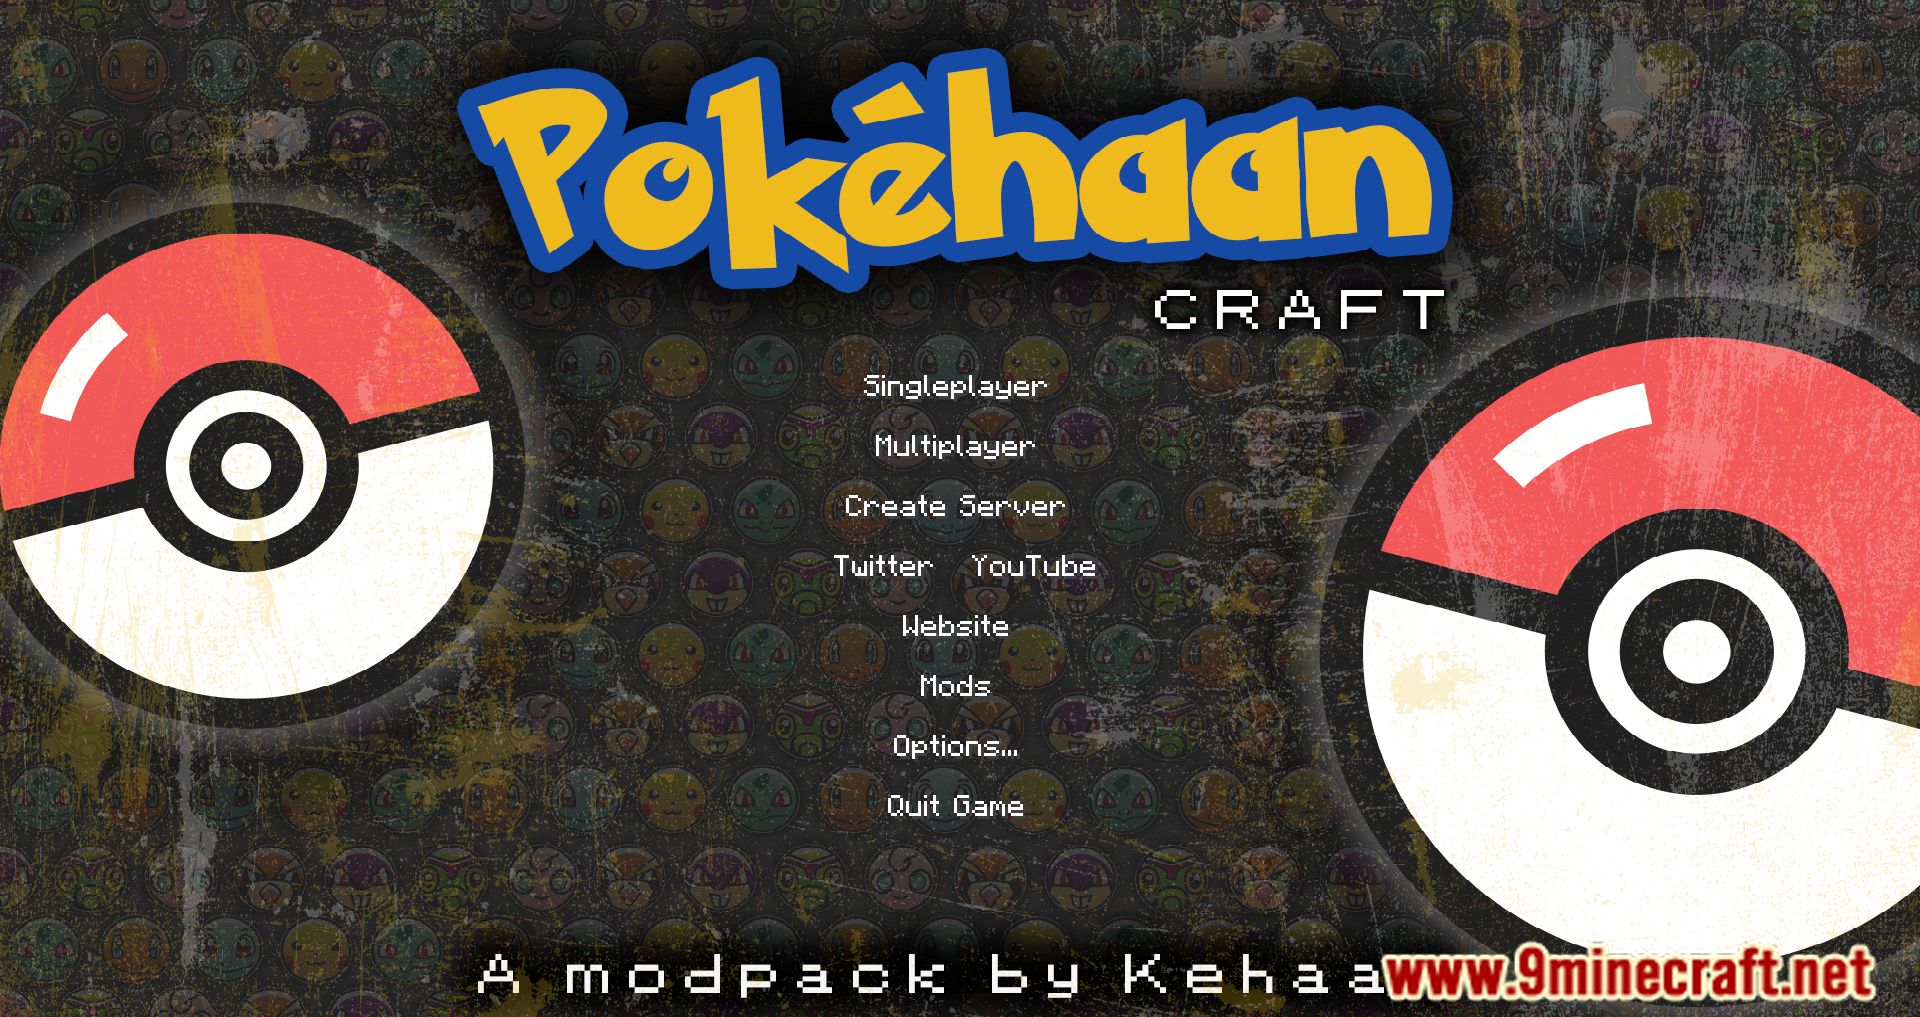 Pokehaan Craft Modpack (1.12.2) - The World of Pokémon 2